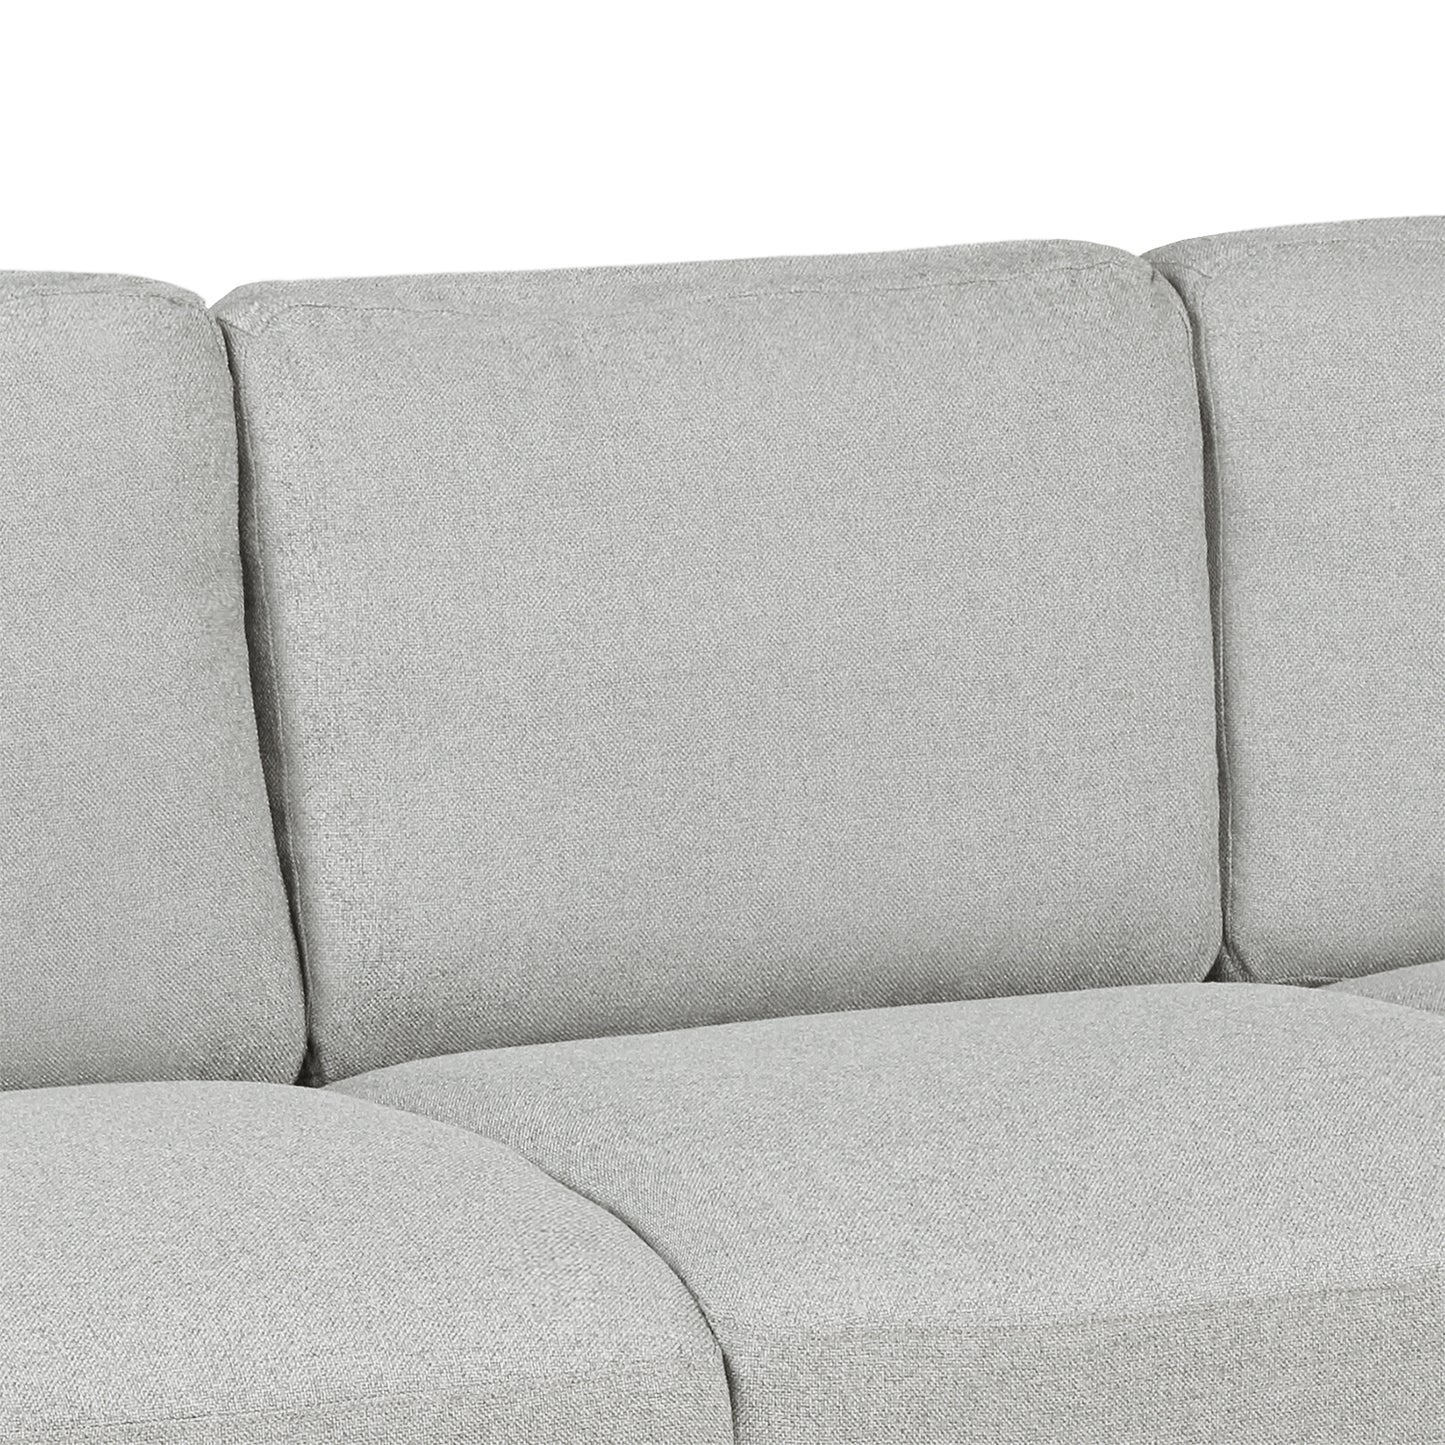 3-Seat Sofa Living Room Linen Fabric Sofa (Light Gray)